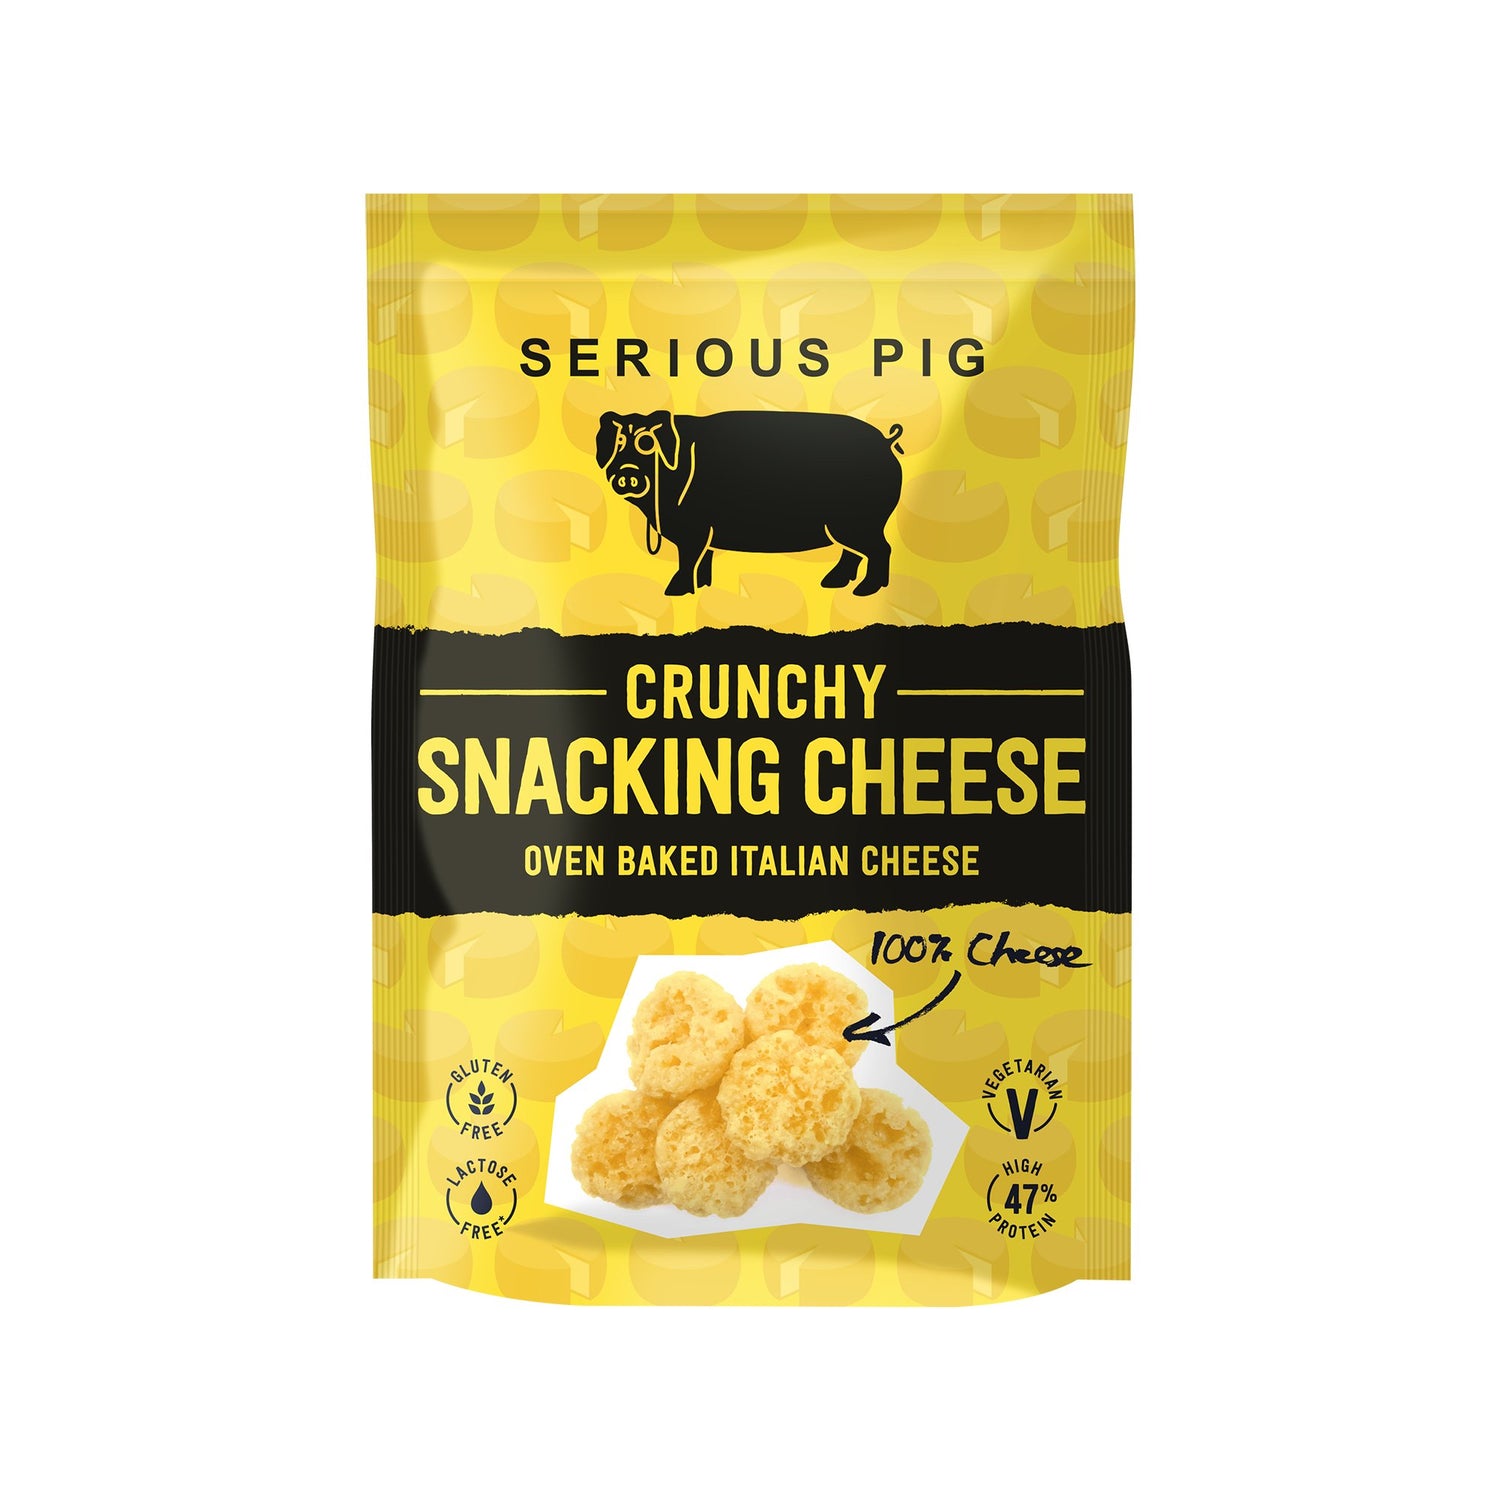 Serious Pig Crunchy Snacking Cheese x 4 okusi - Keto prijazno - theskinnyfoodco